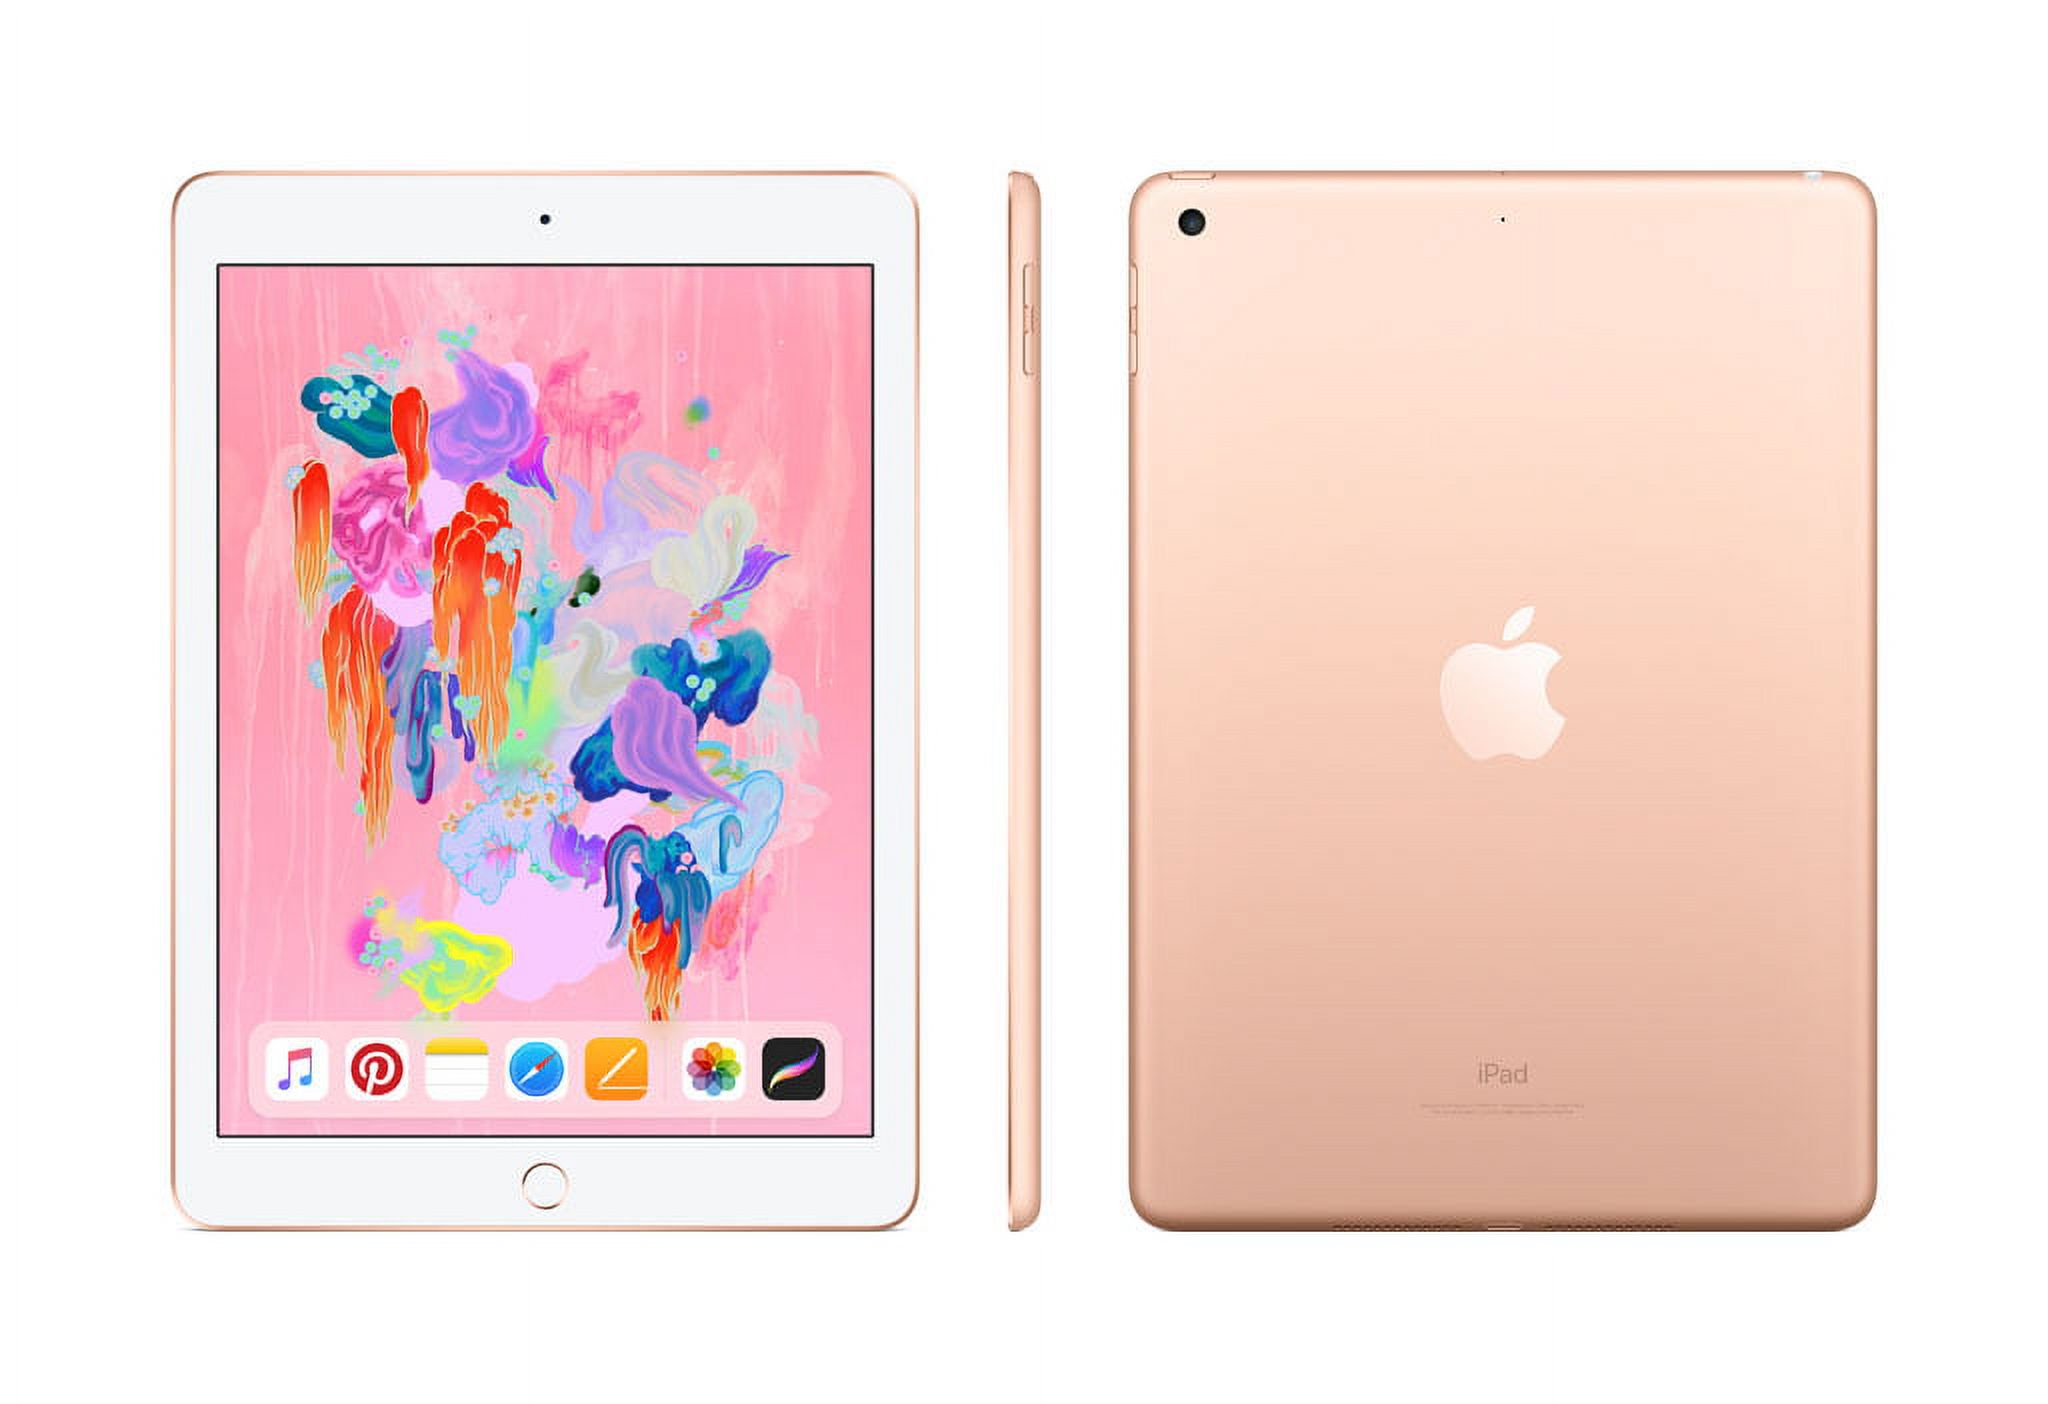 Apple iPad (6th Gen) 32GB Wi-Fi - Gold - image 5 of 5